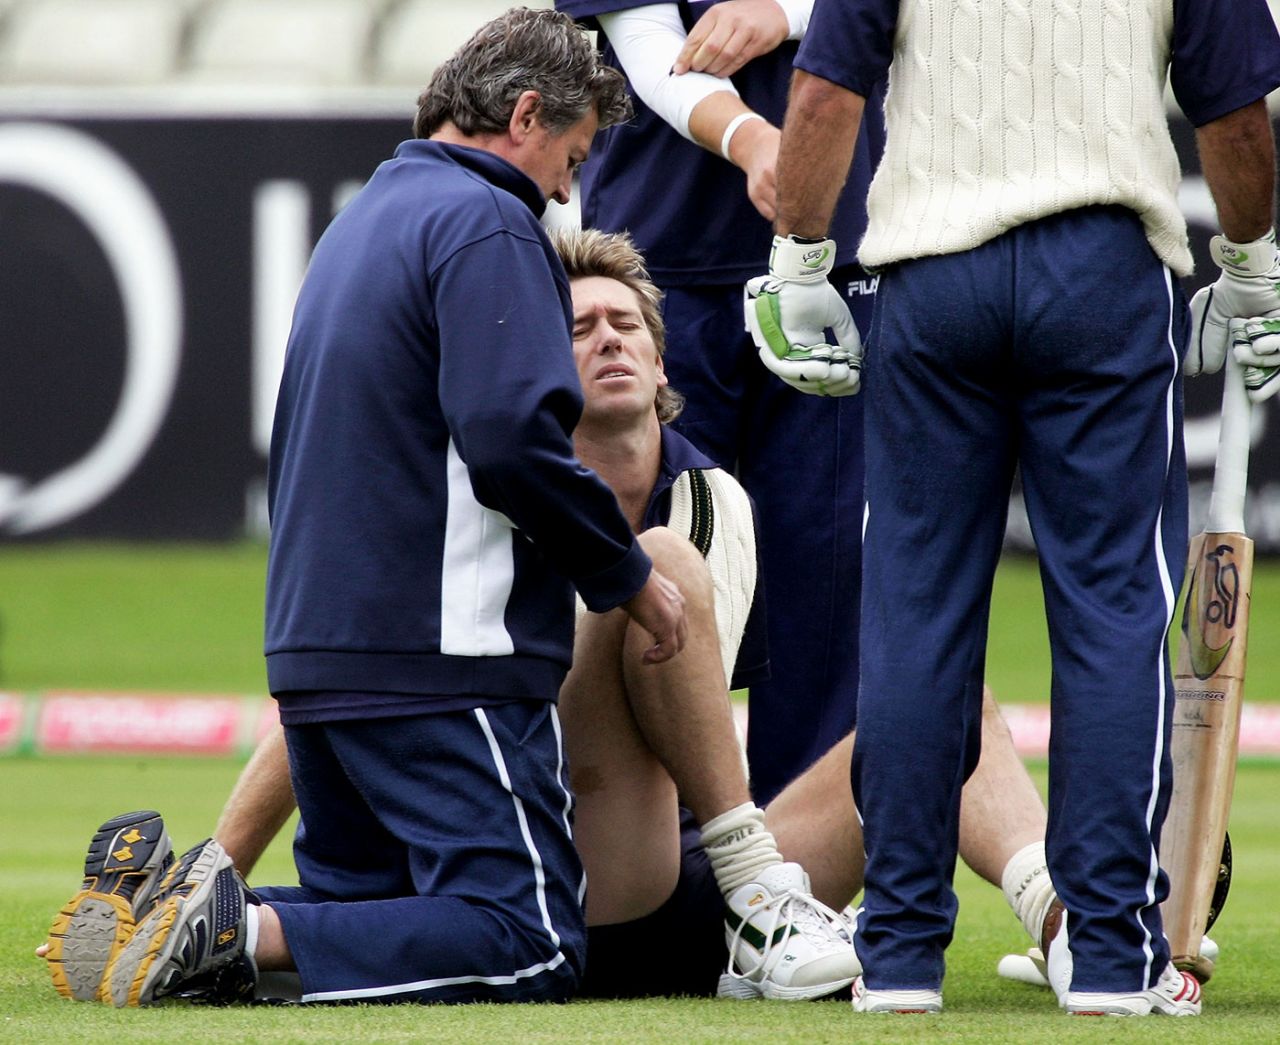 The physio has a look at Glenn McGrath's injured ankle, England v Australia, Edgbaston, August 4, 2005